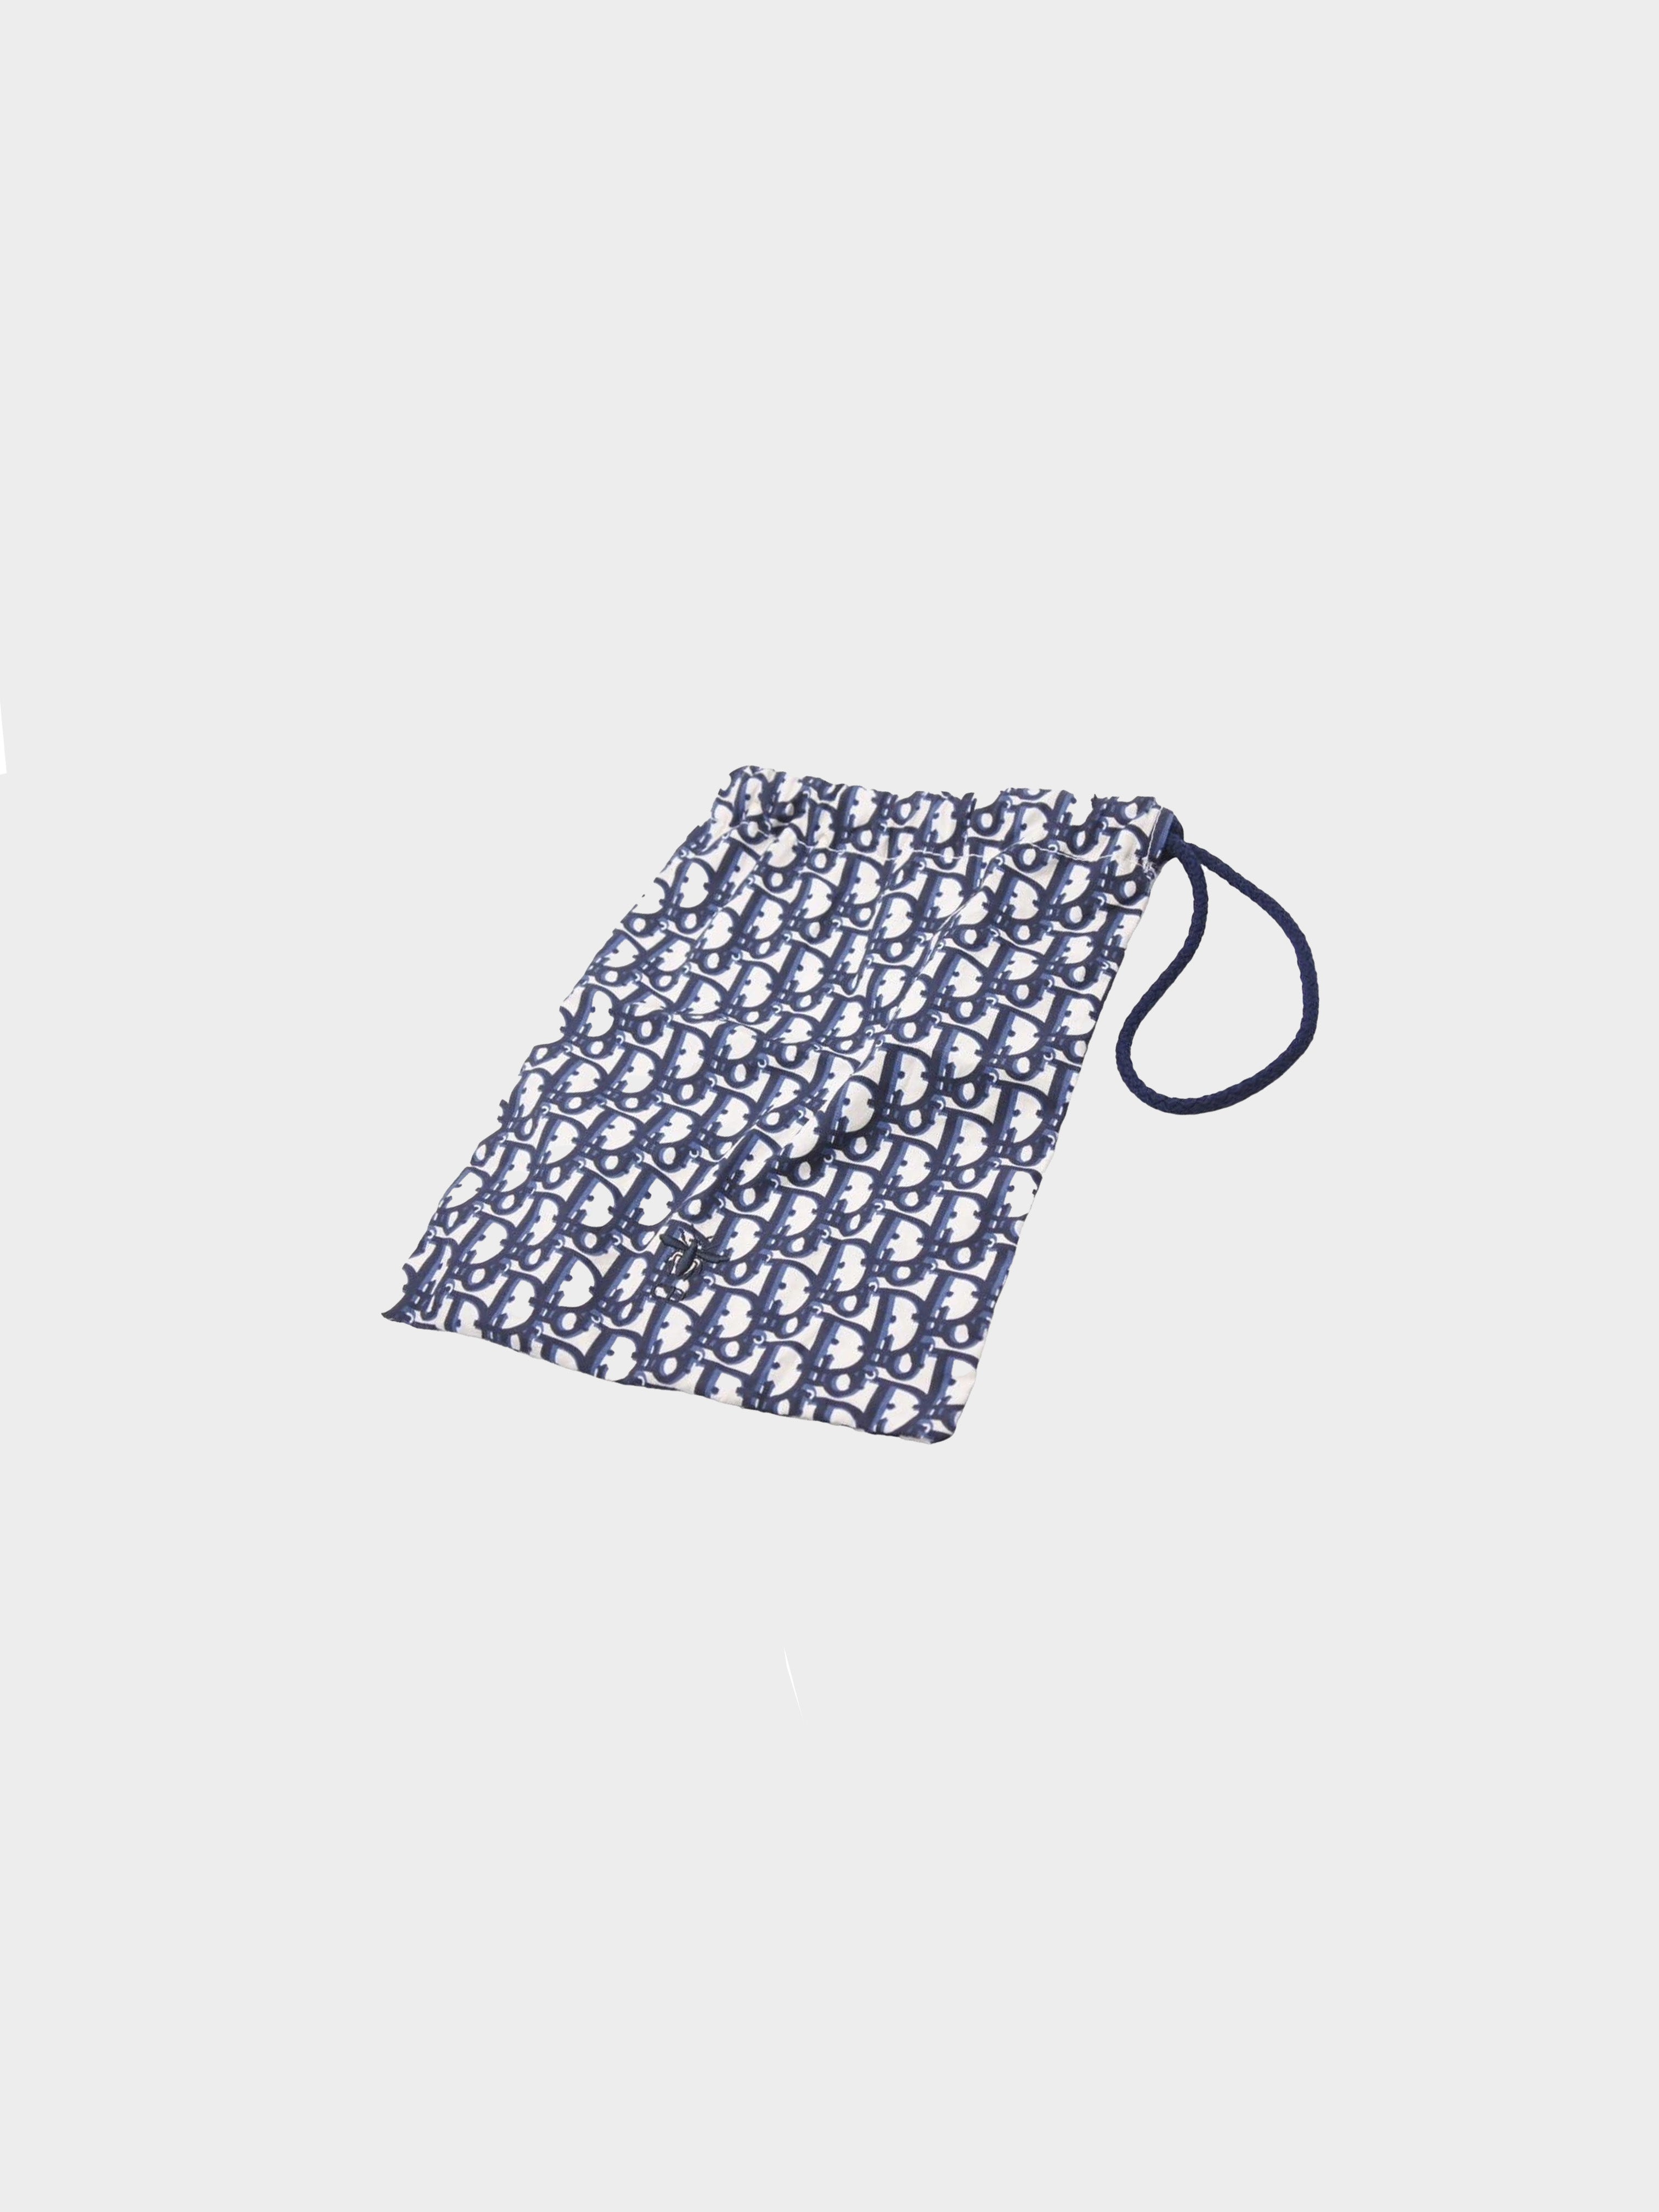 Christian Dior SS21 Monogram Oblique Swimsuit